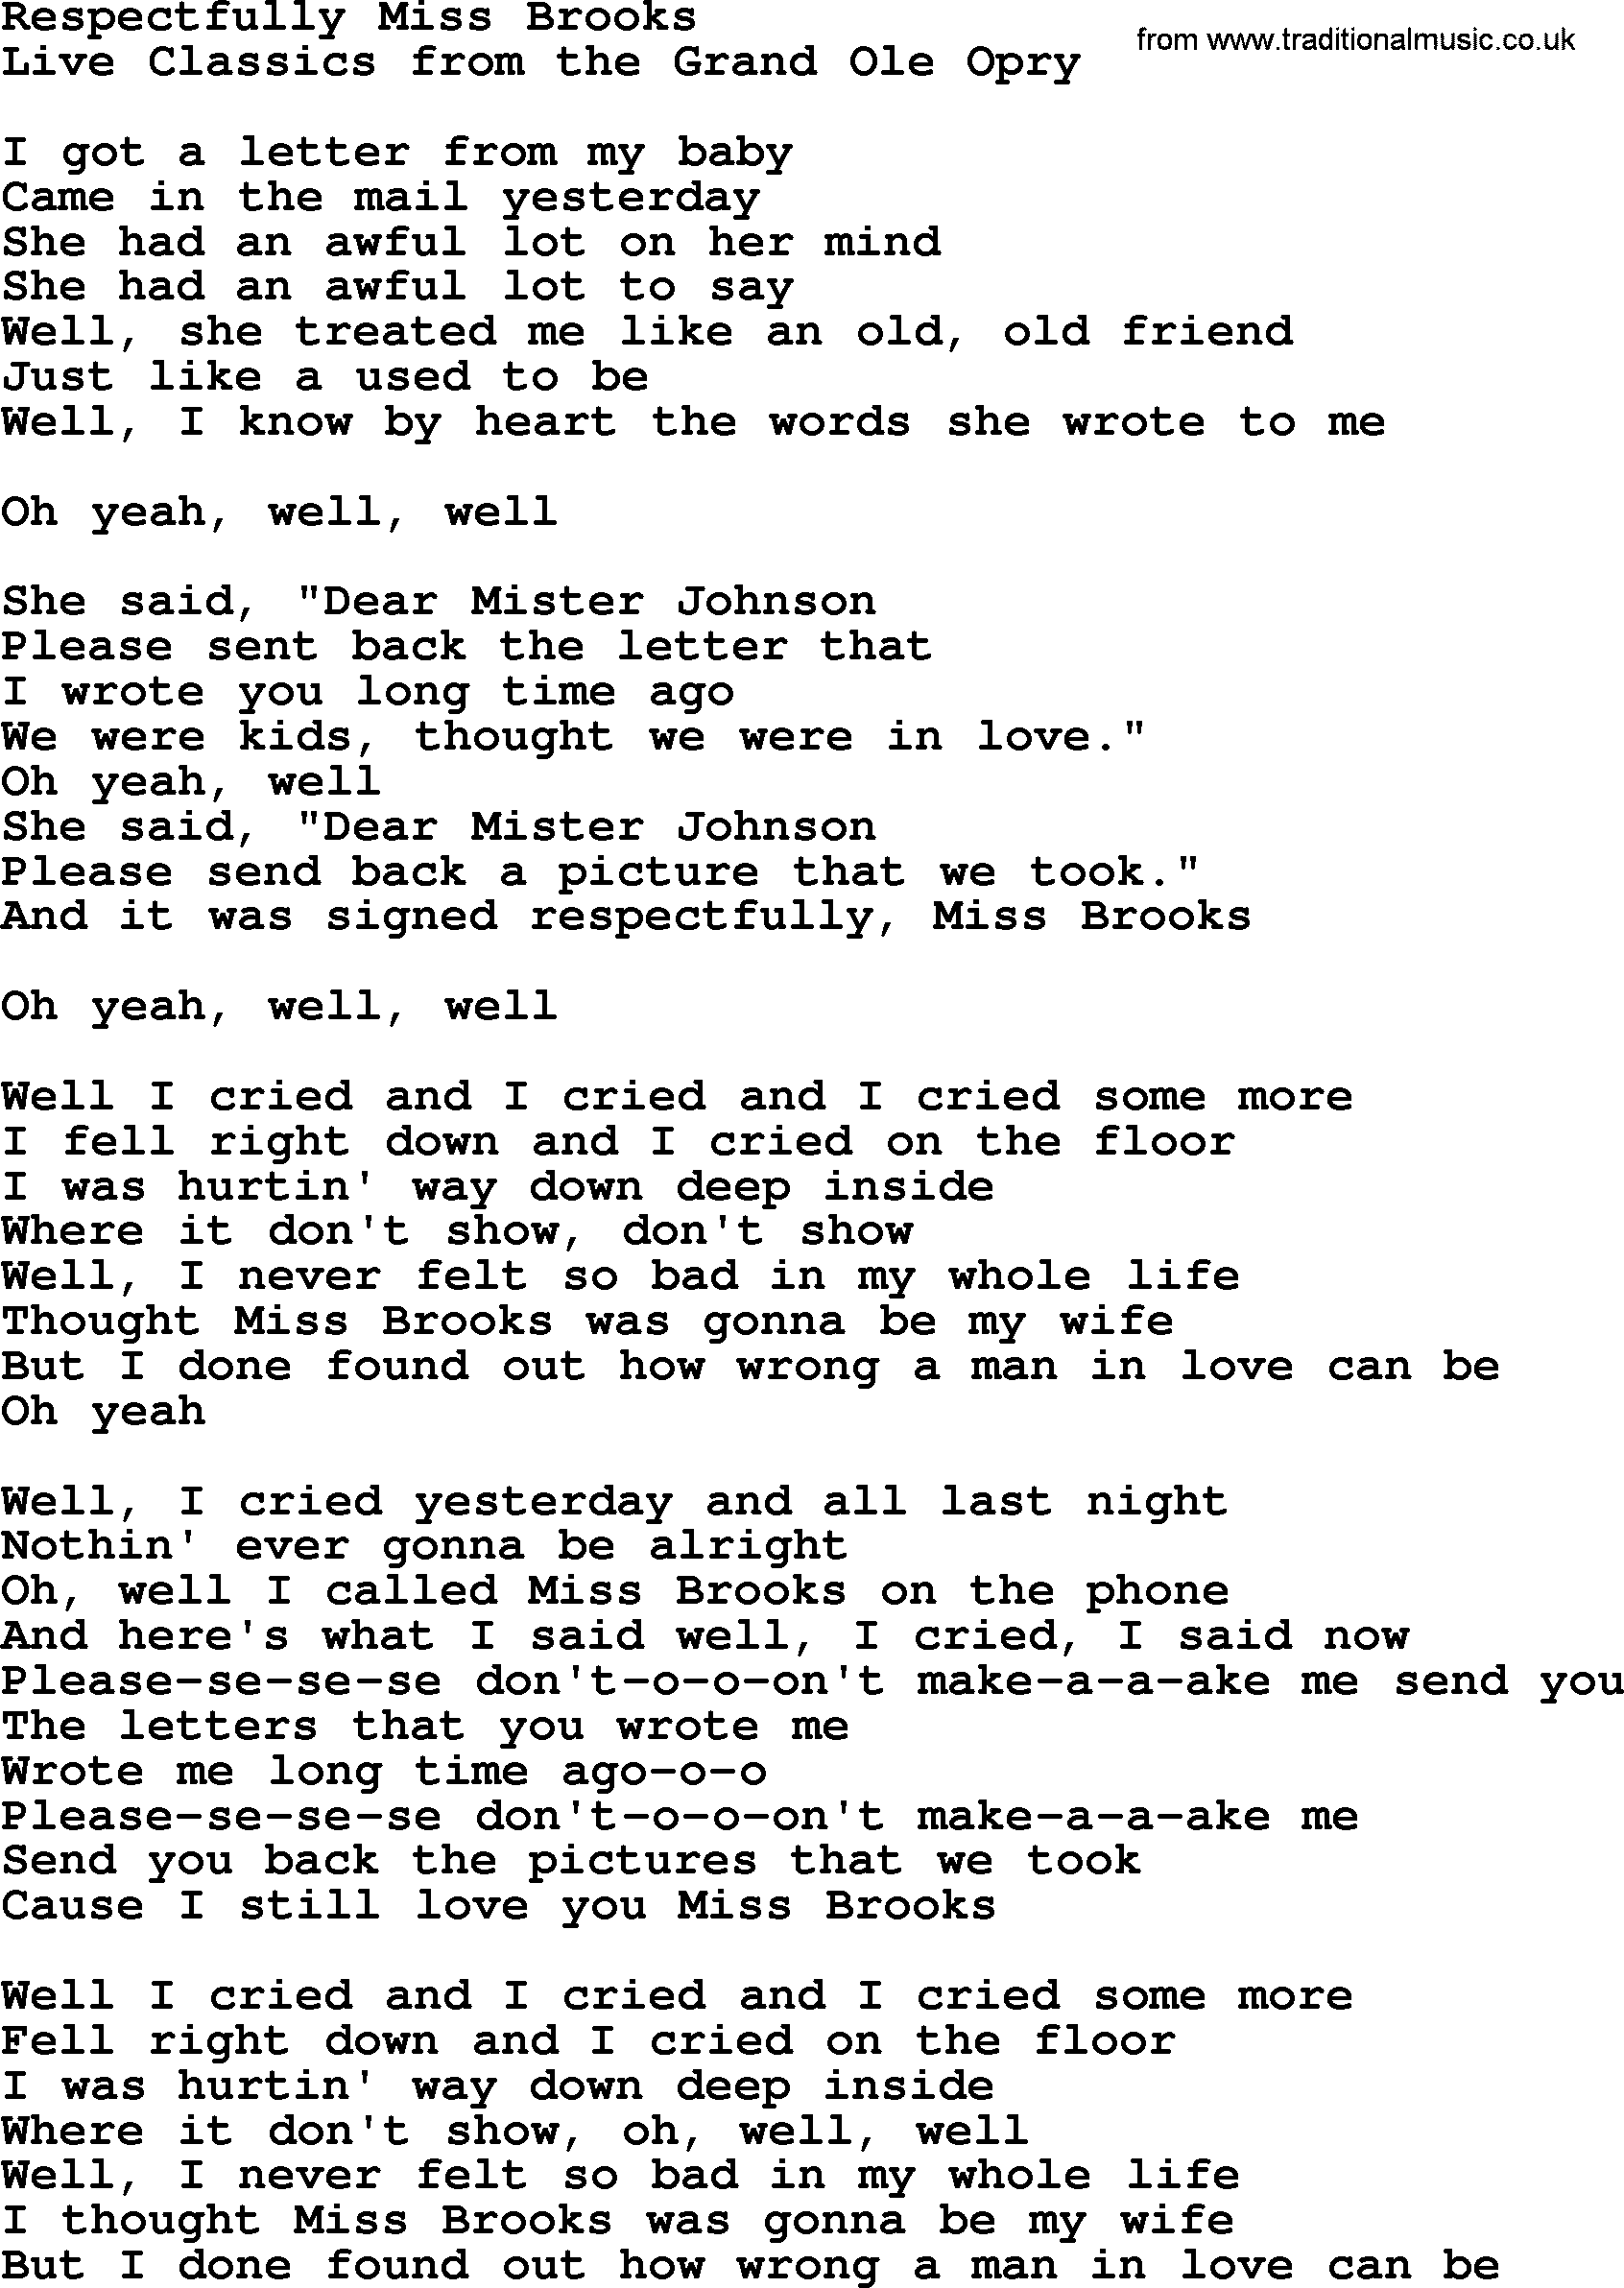 Marty Robbins song: Respectfully Miss Brooks, lyrics